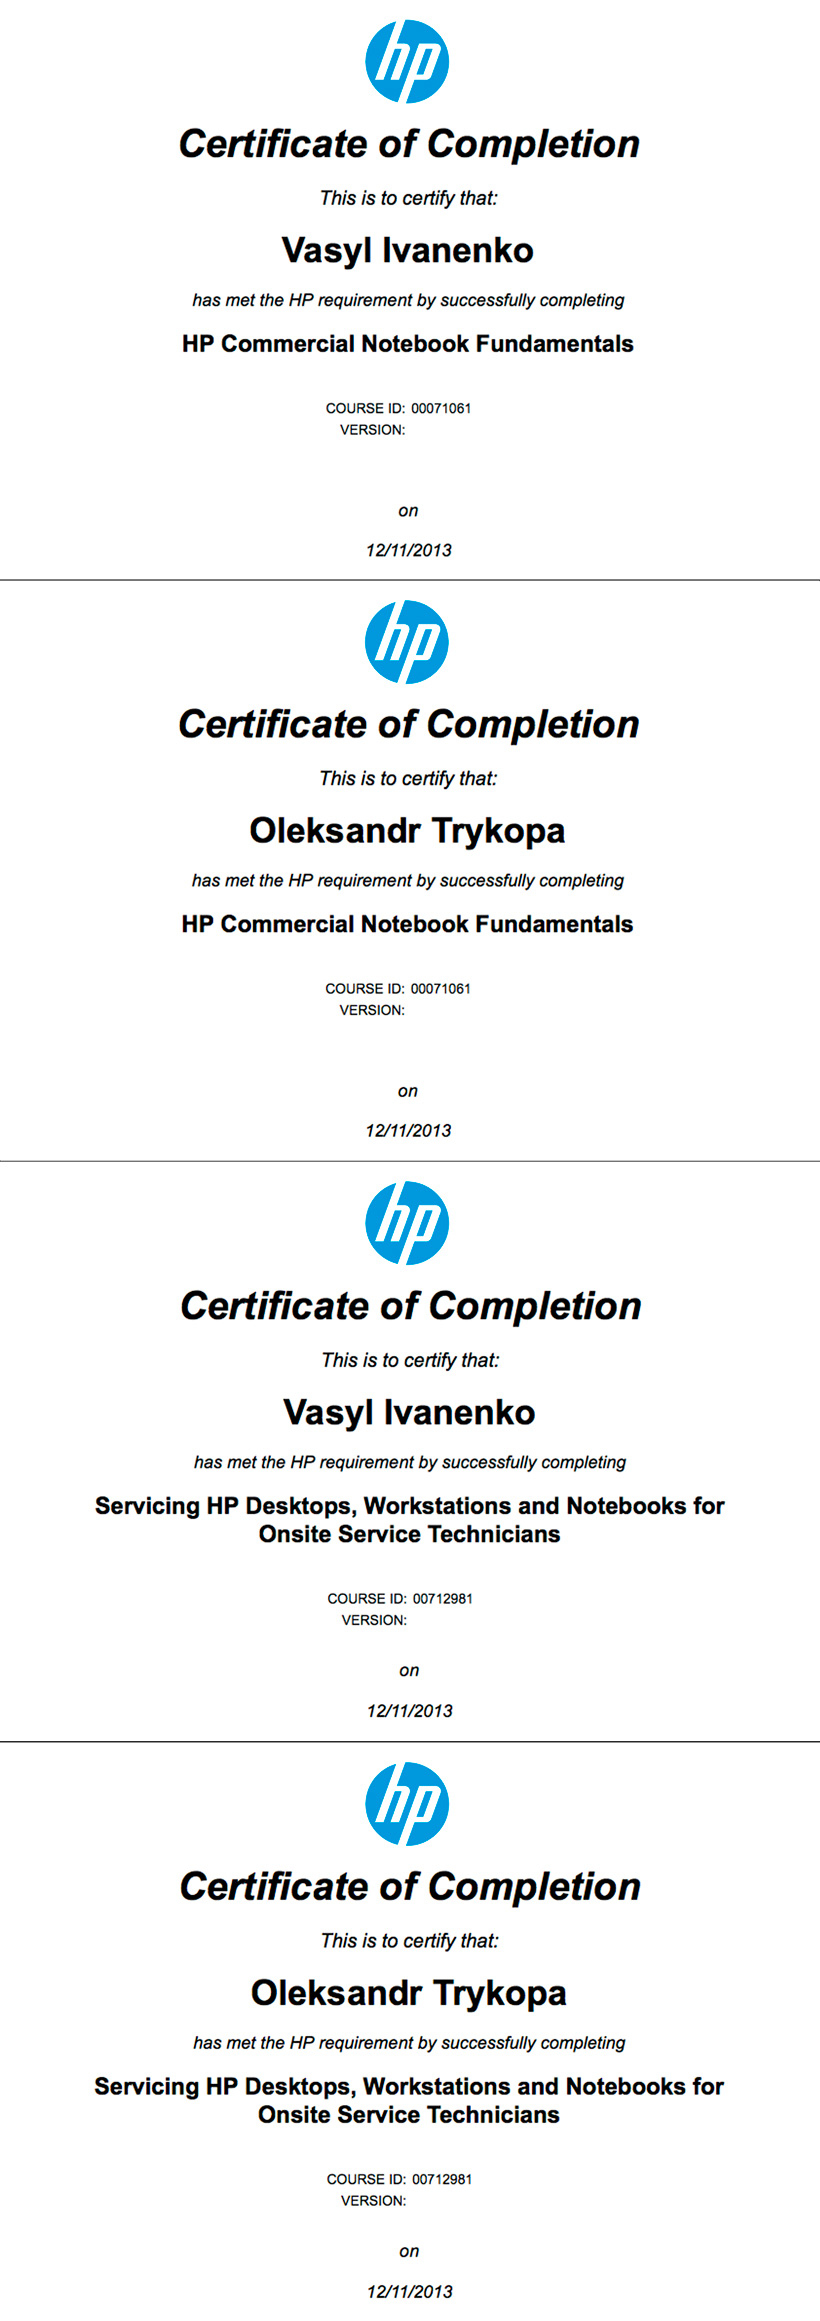 hp-certificates